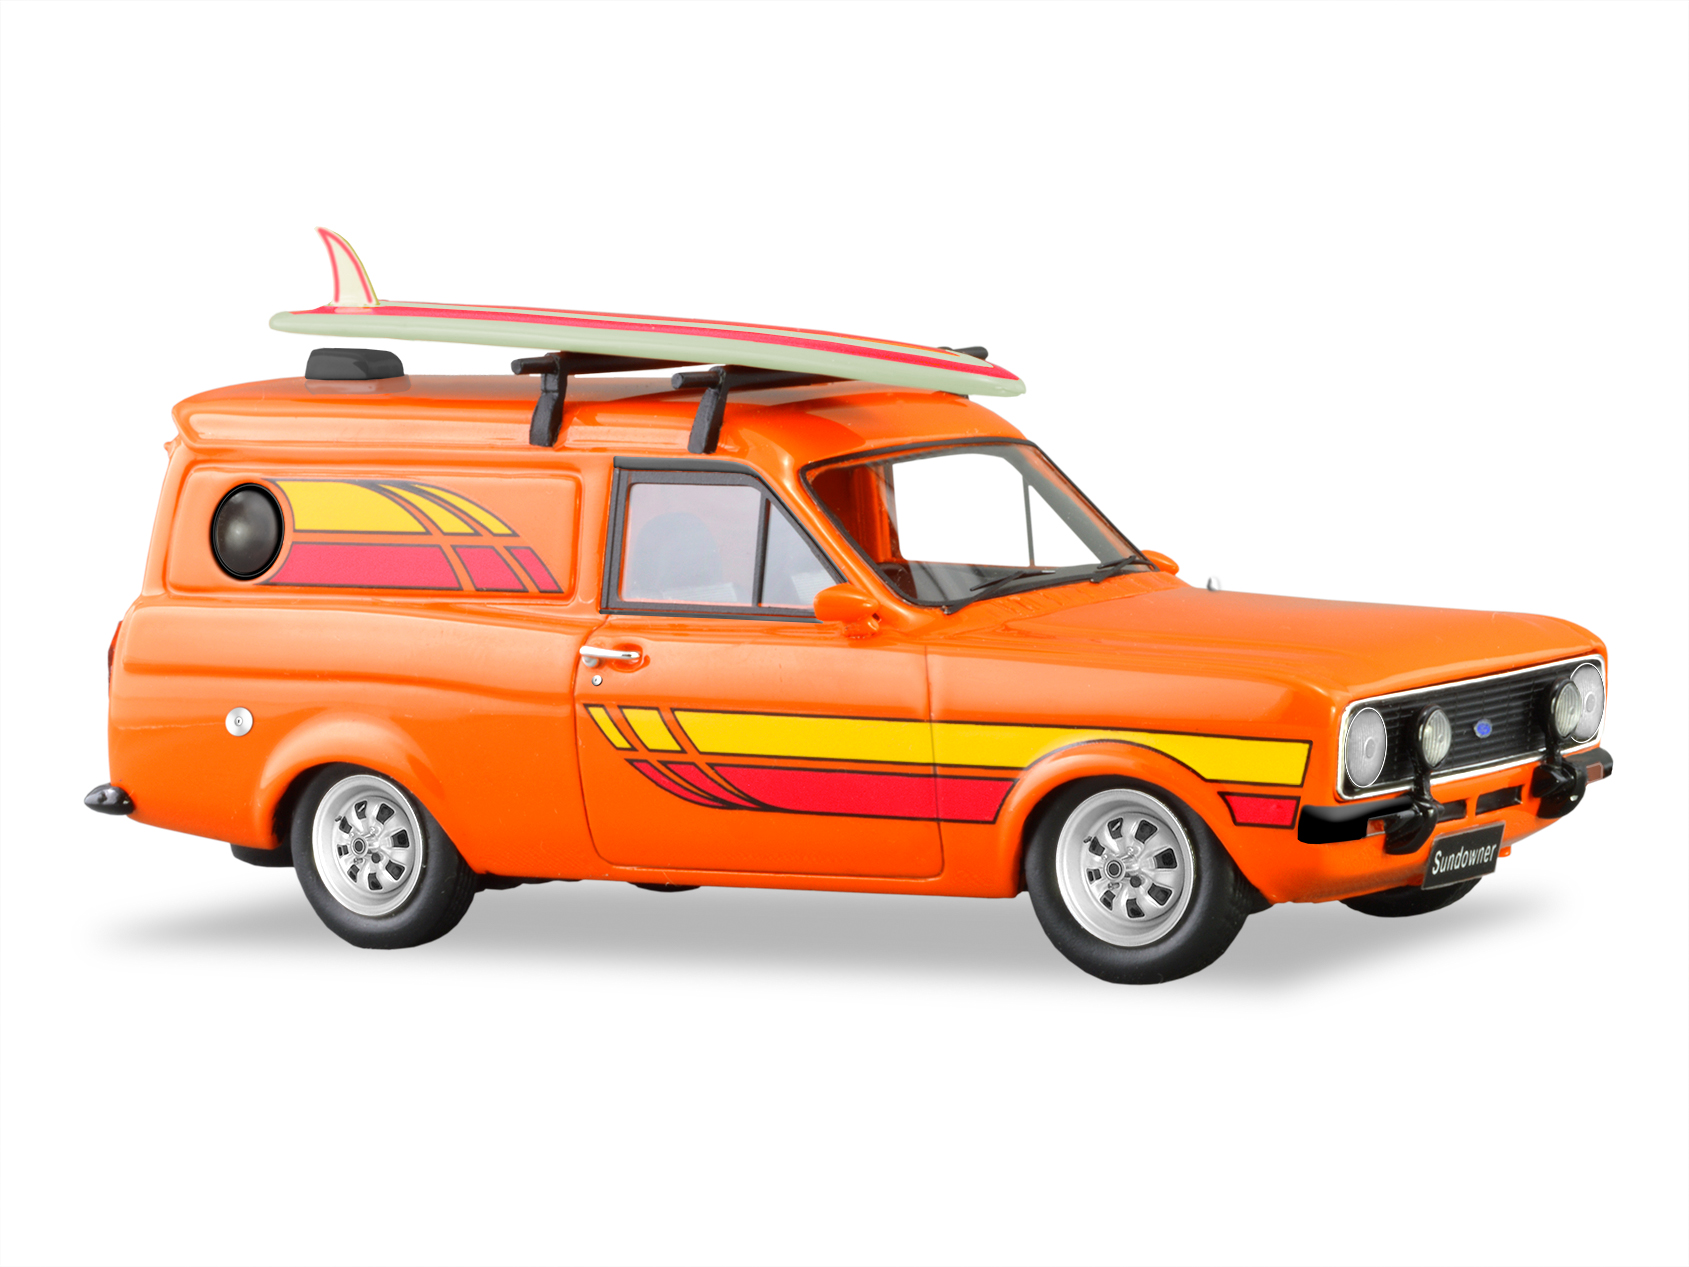 1978 Ford Escort Sundowner Panel Van With Surfboard – Raw Orange